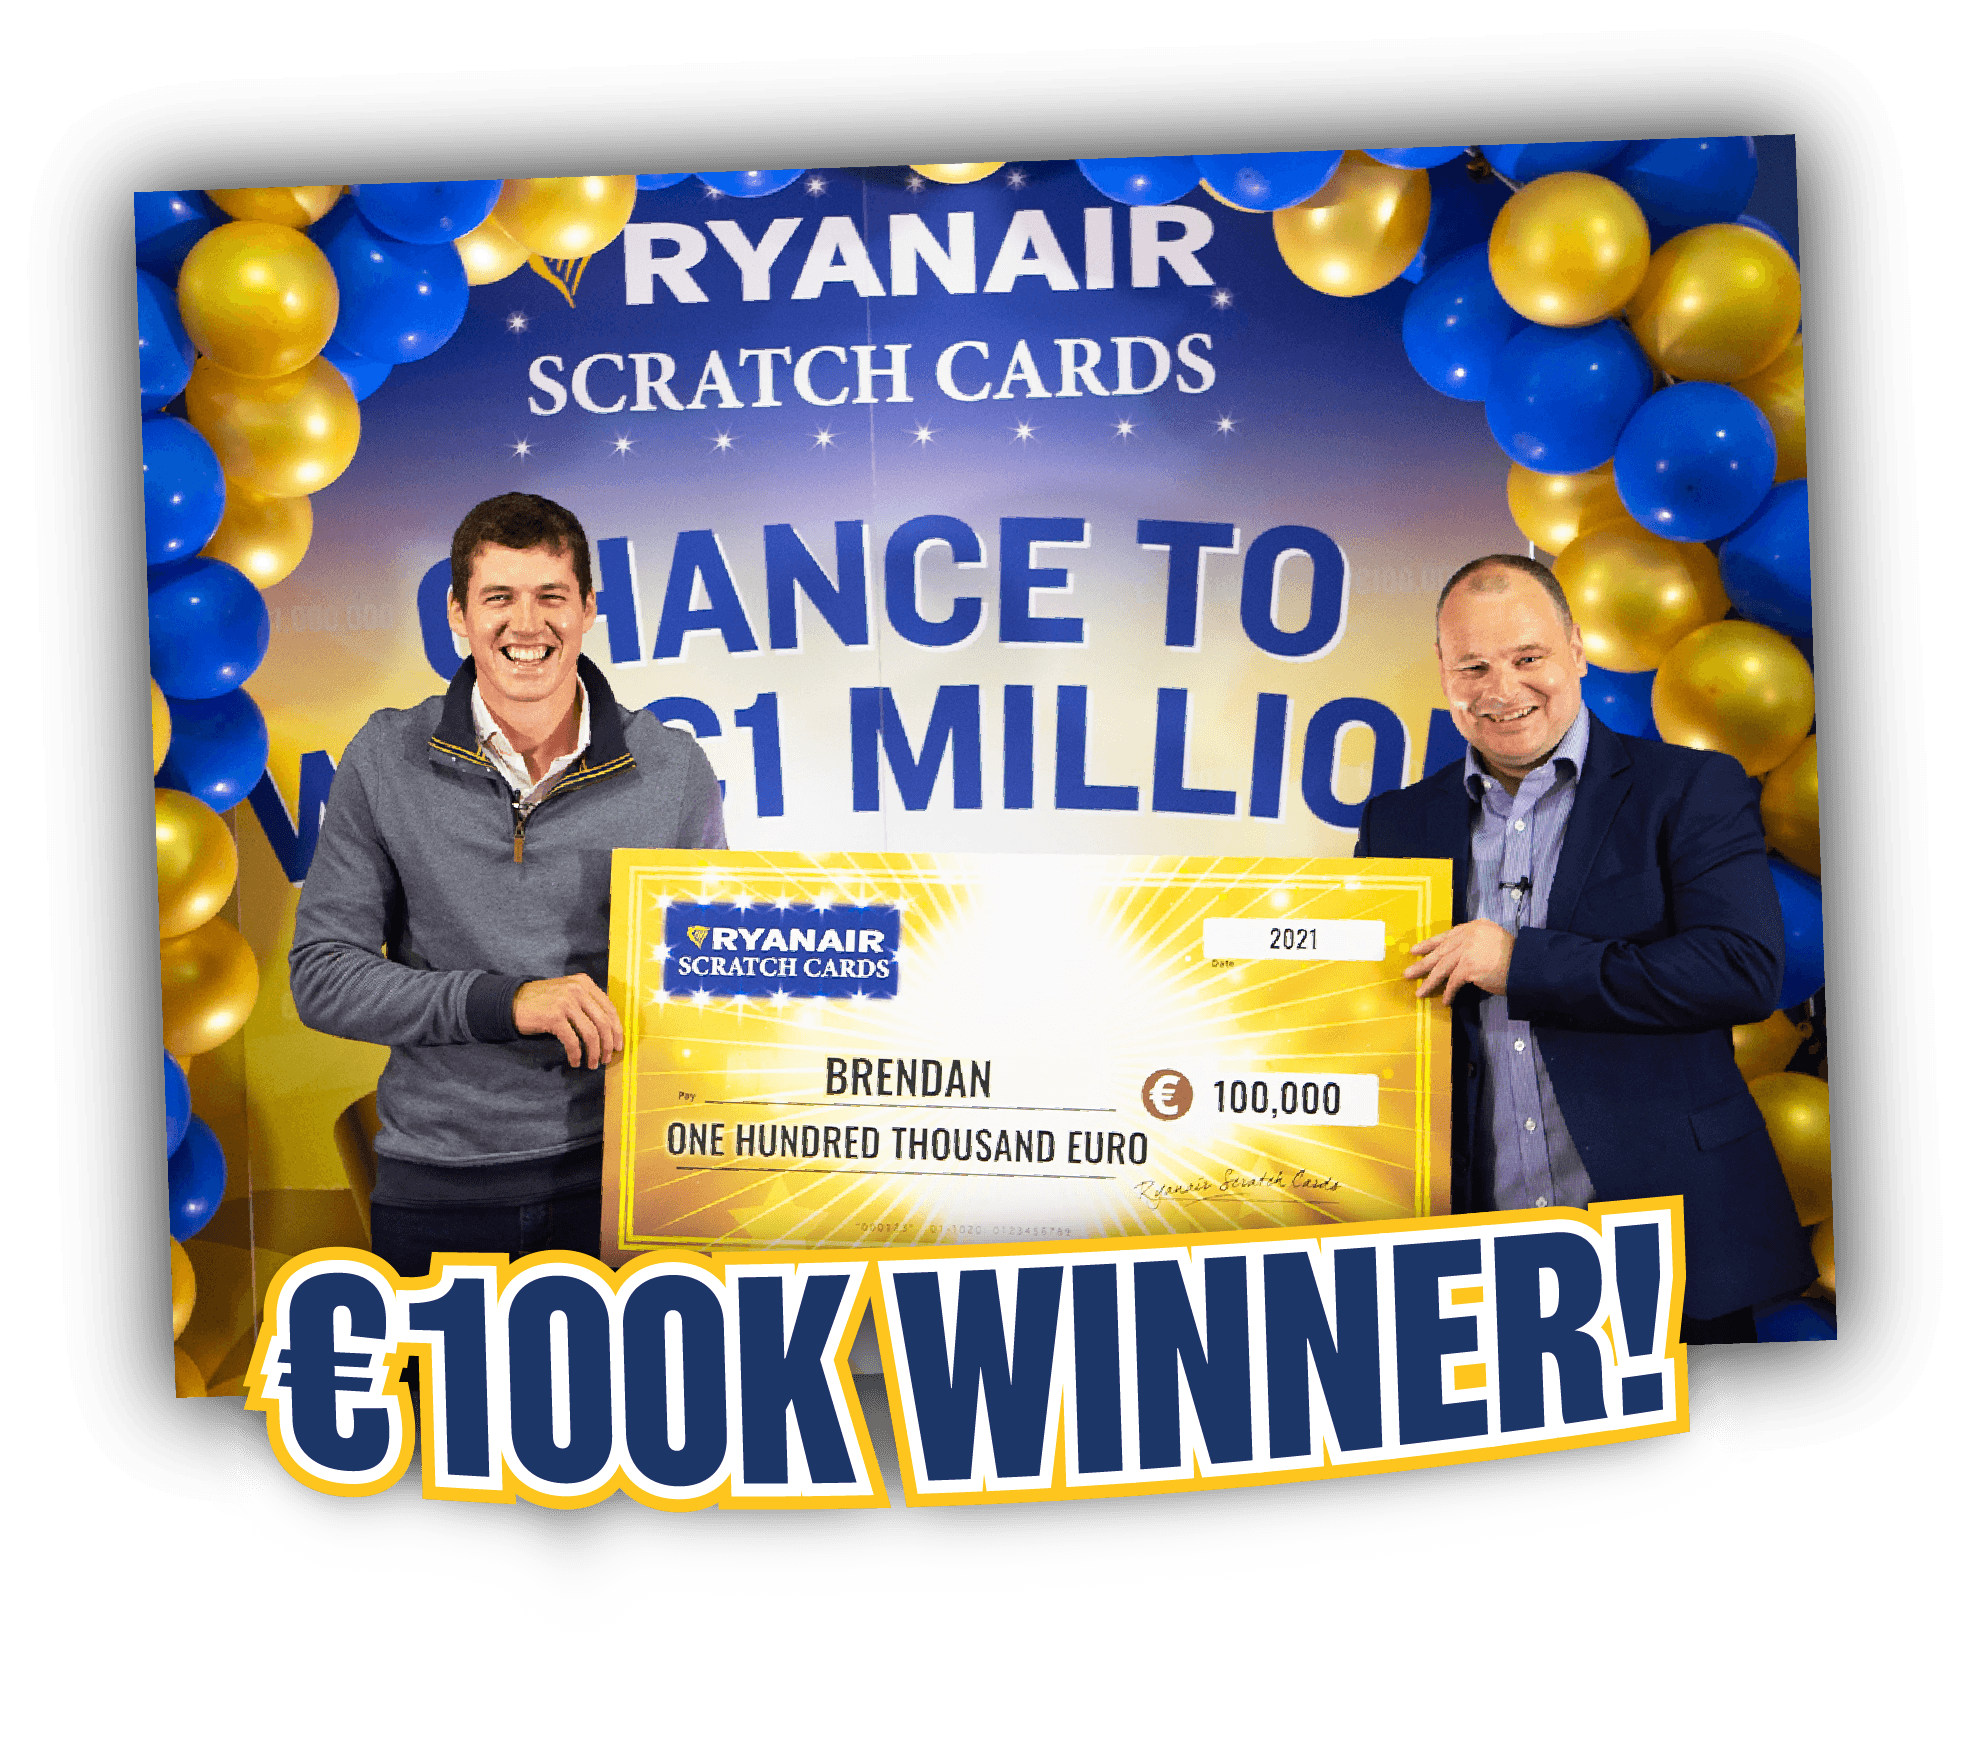 Brendan Finnegan €100K winner!